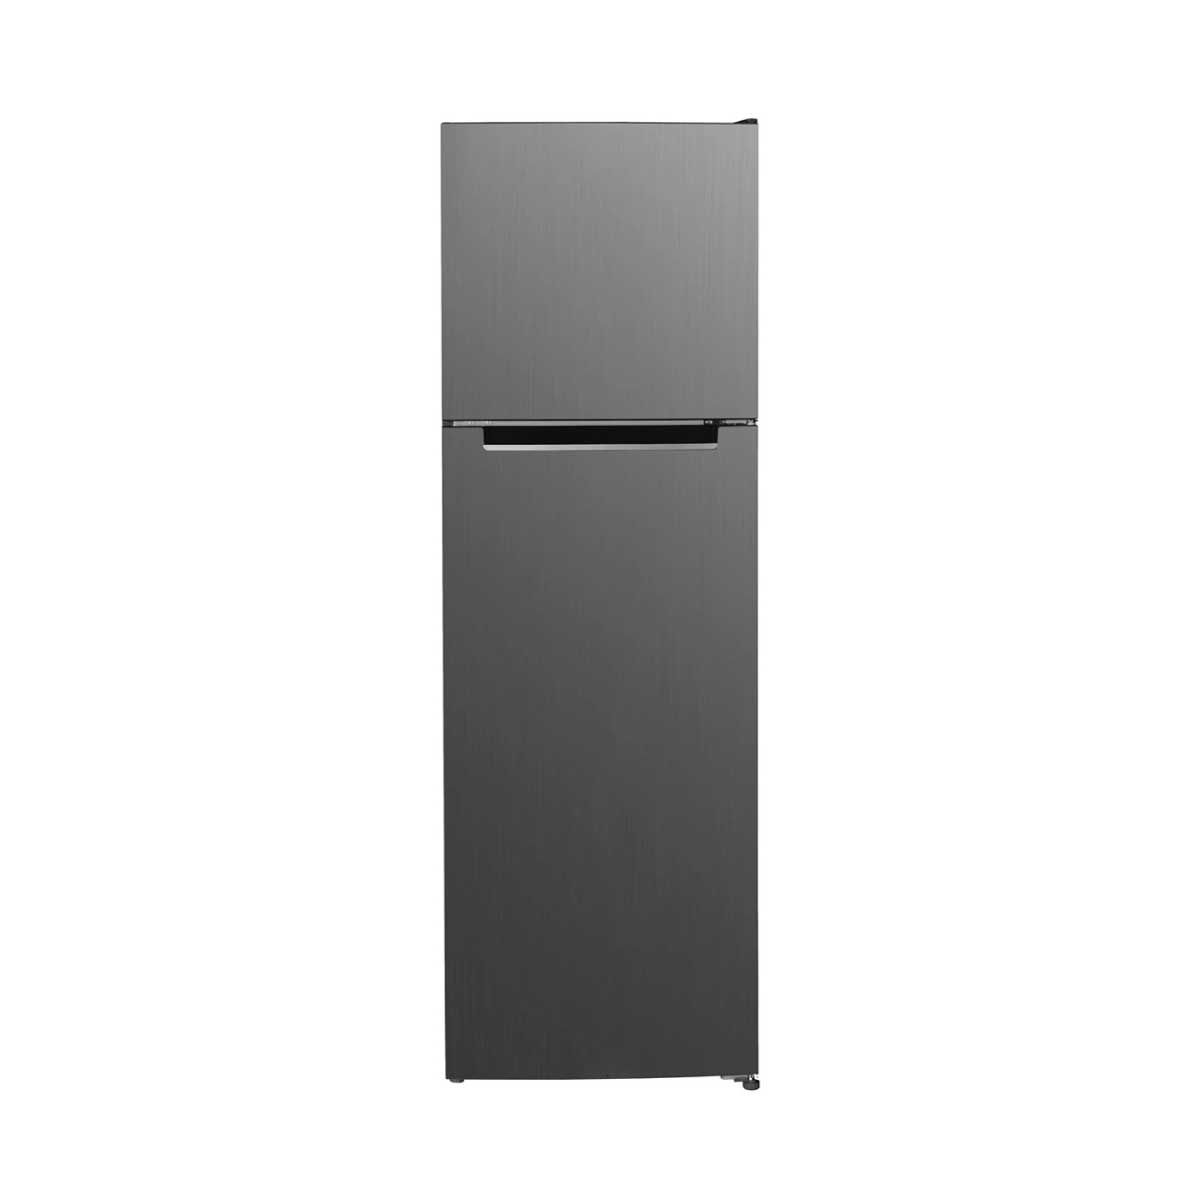 HAIER ตู้เย็น 2 ประตู  8.9Q INVERTER สีเทาเข้ม รุ่นTHM259I